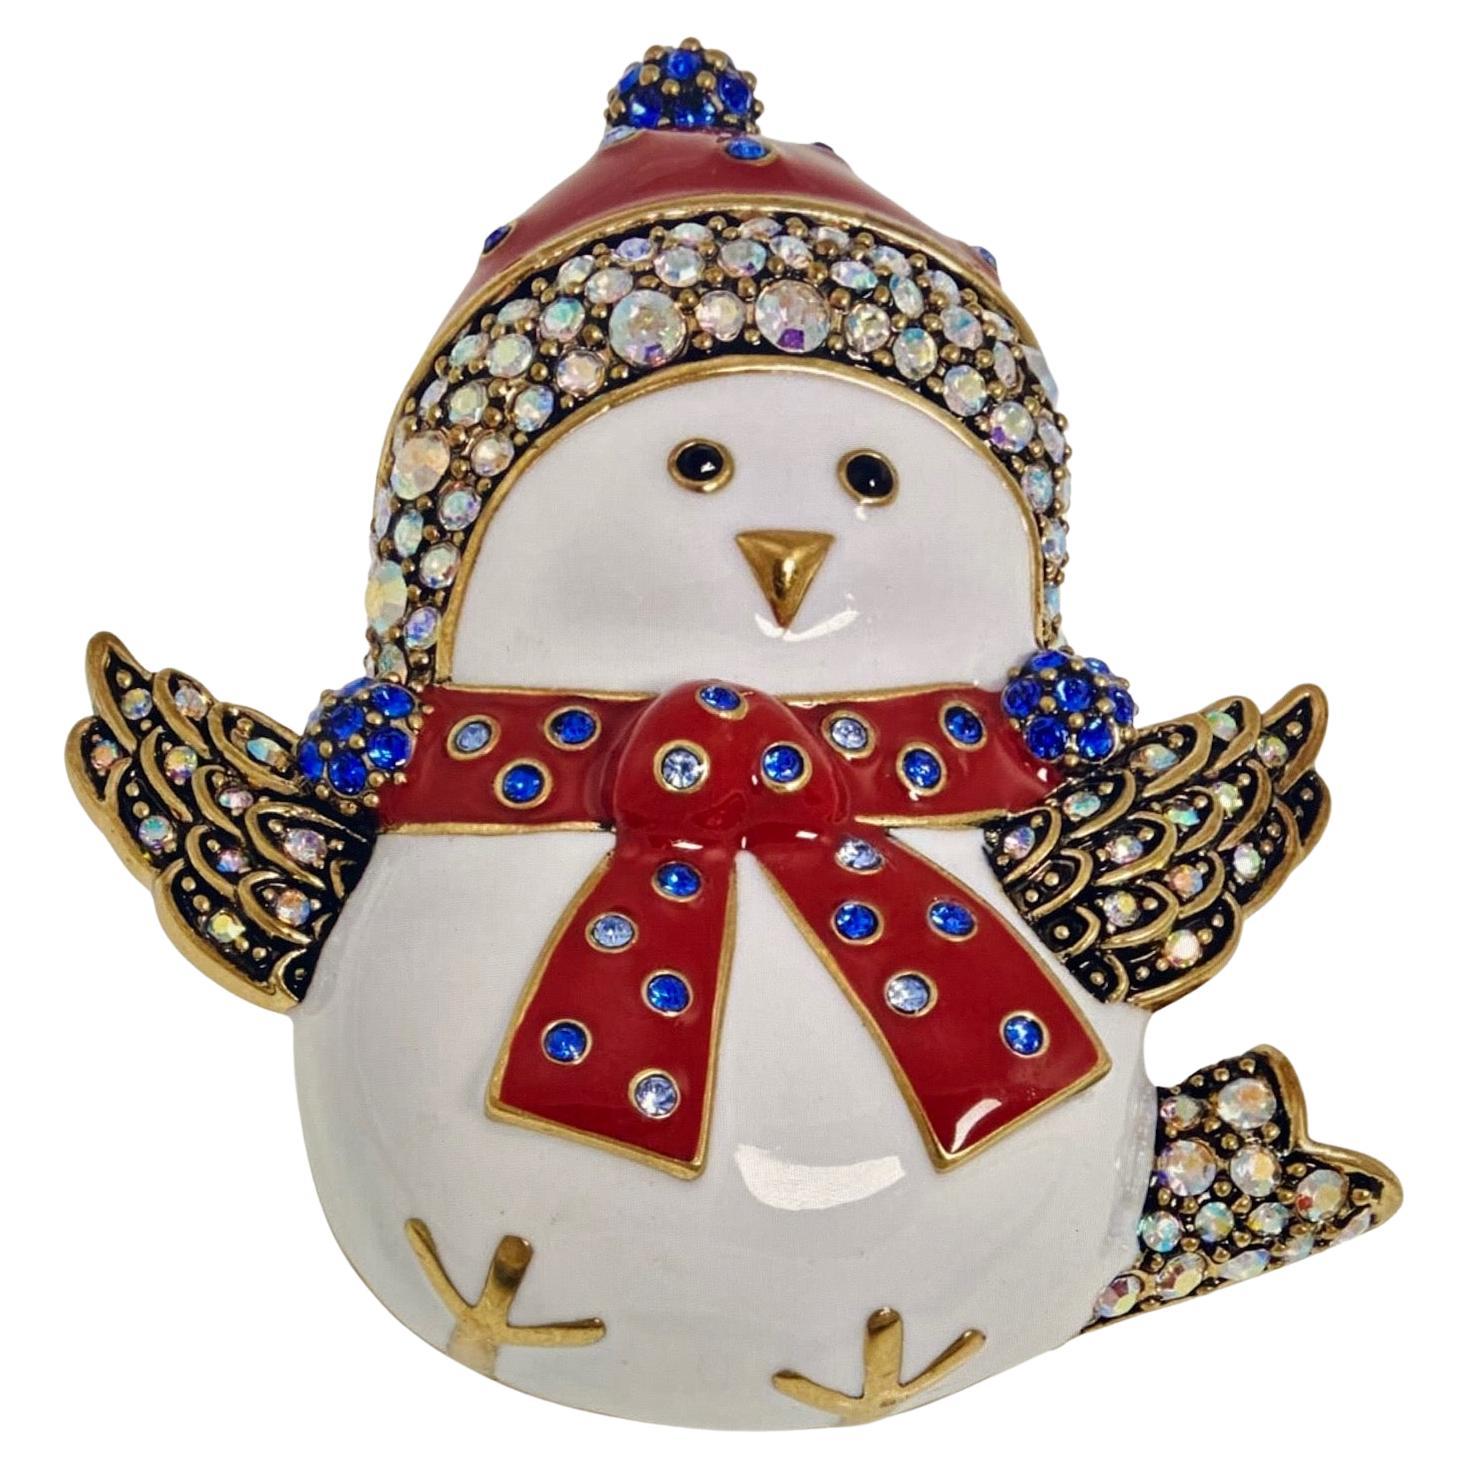 Heidi Daus Baby Snow Bird Crystal Accented Brooch Pin